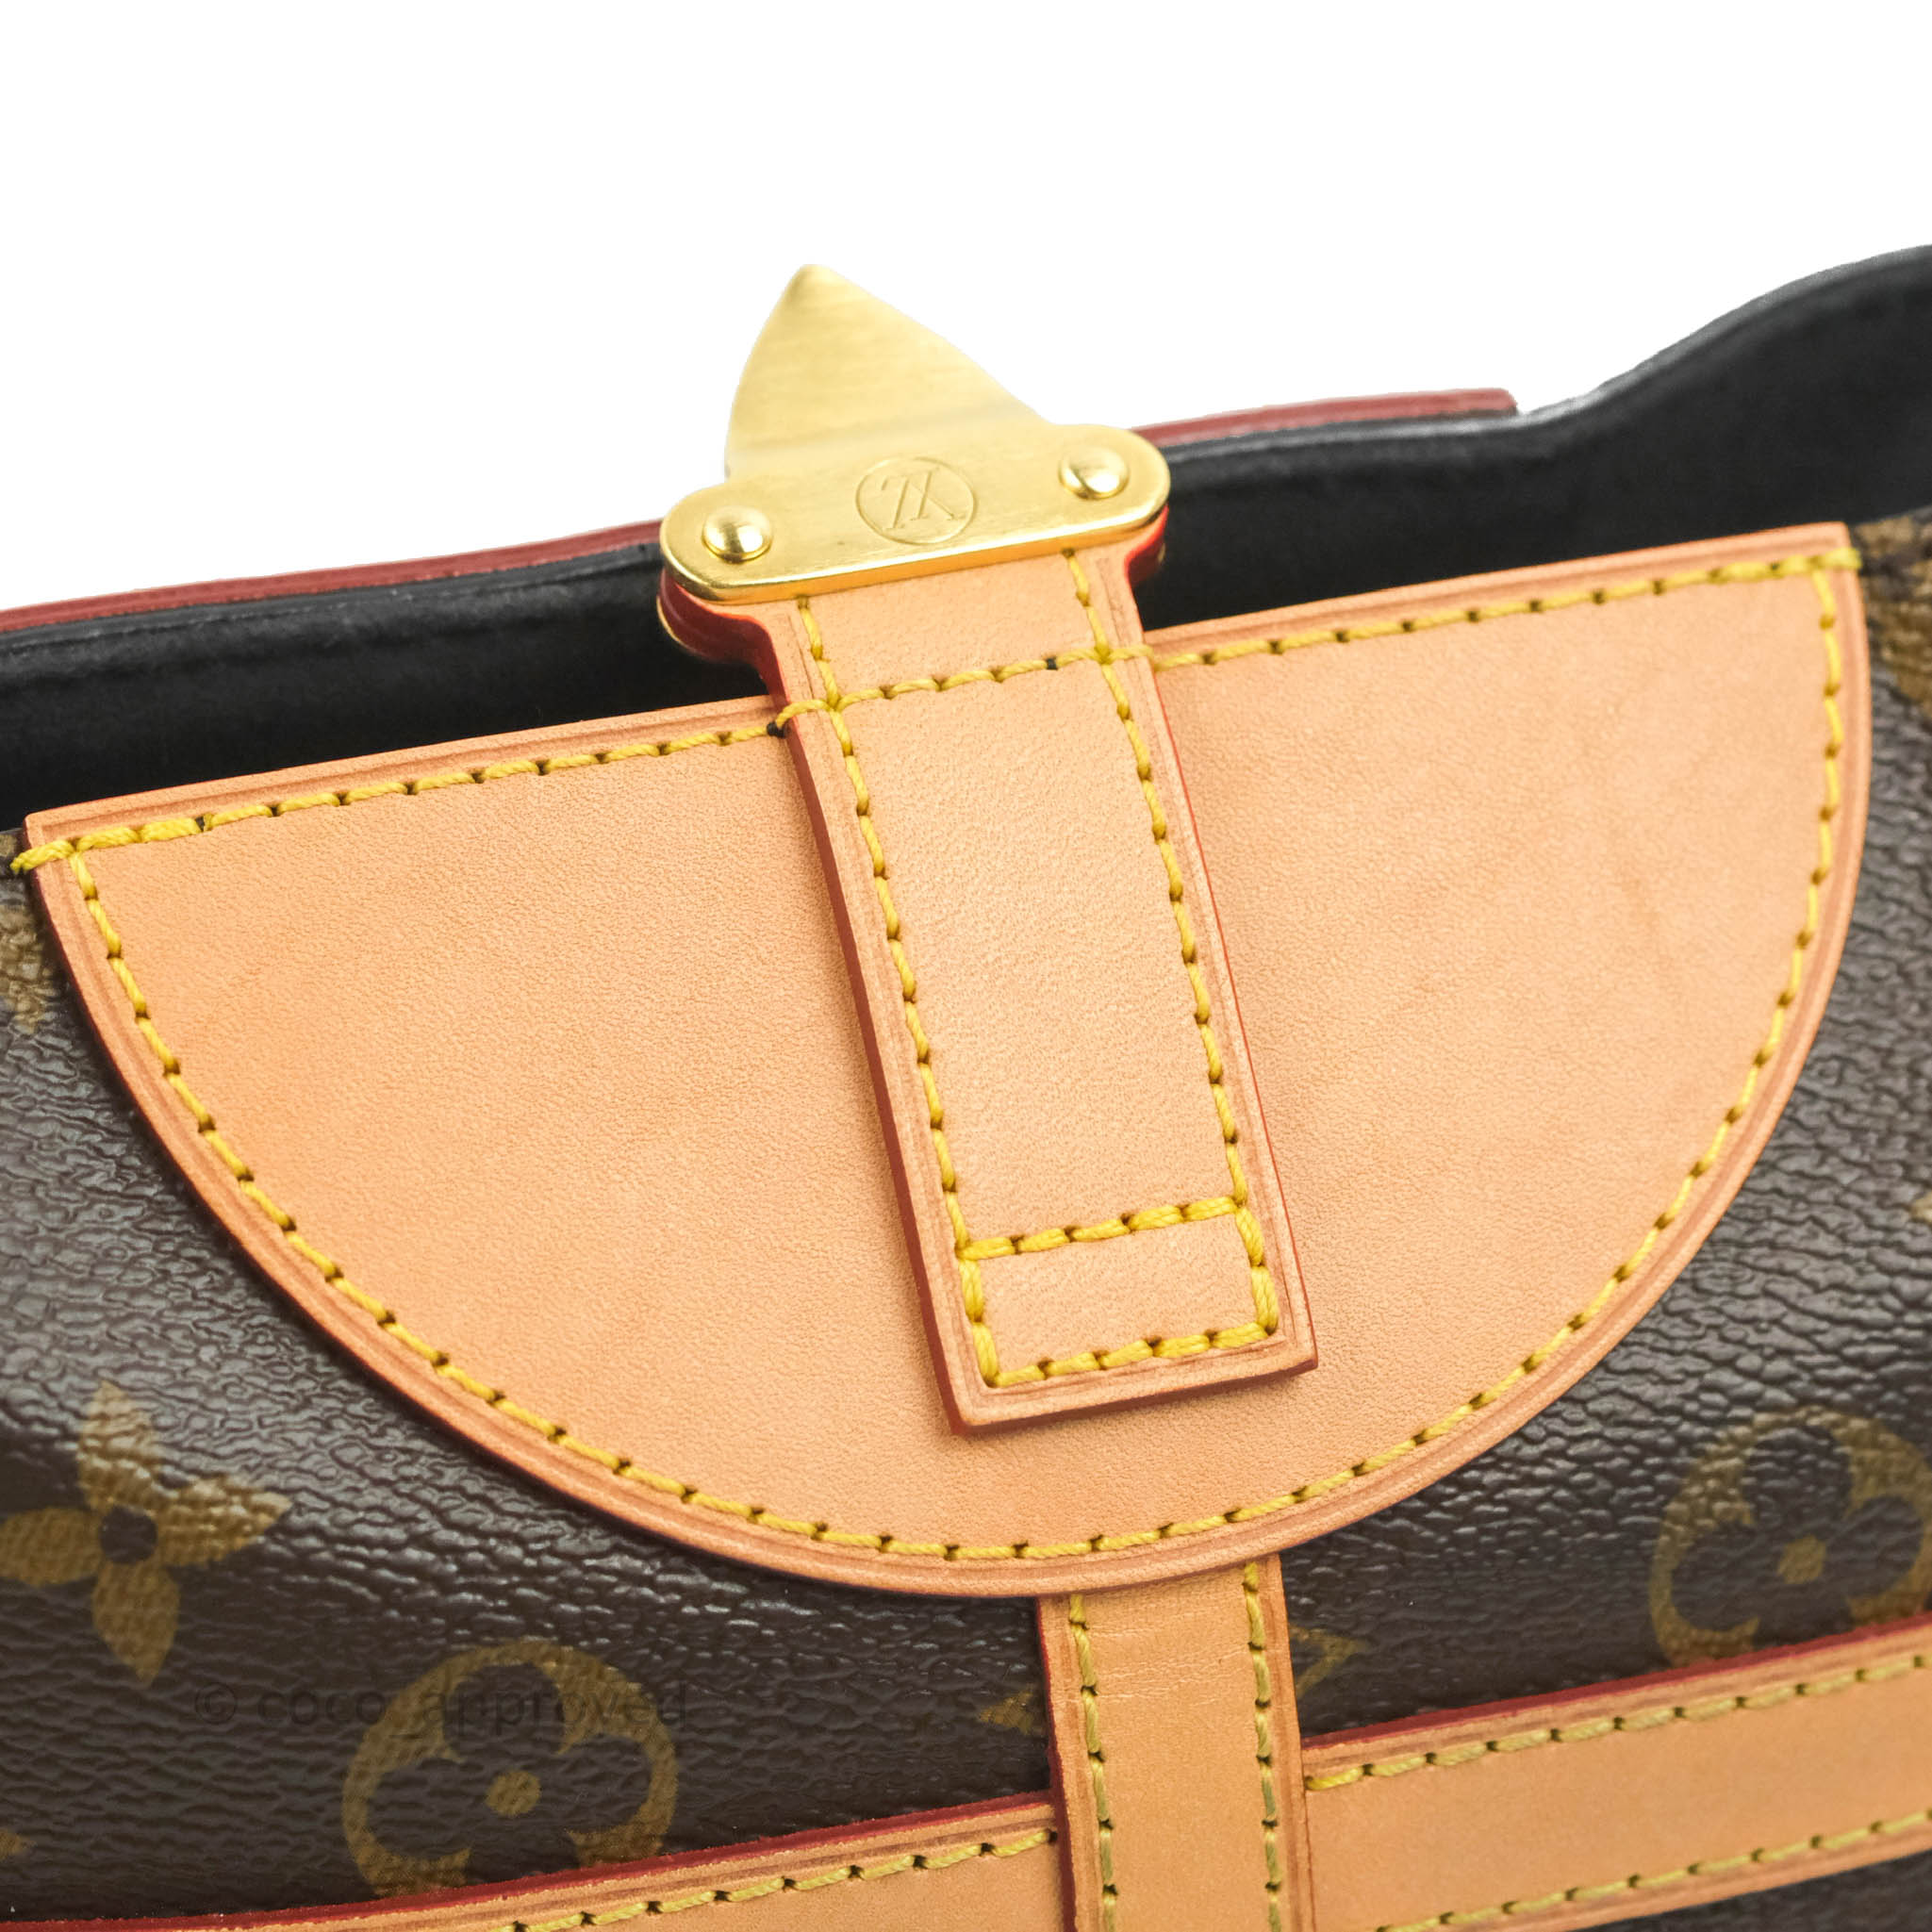 Bag of the Day 40: Louis Vuitton DUFFLE Bucket Bag Monogram Canvas  #bagoftheday #luxurypl38 